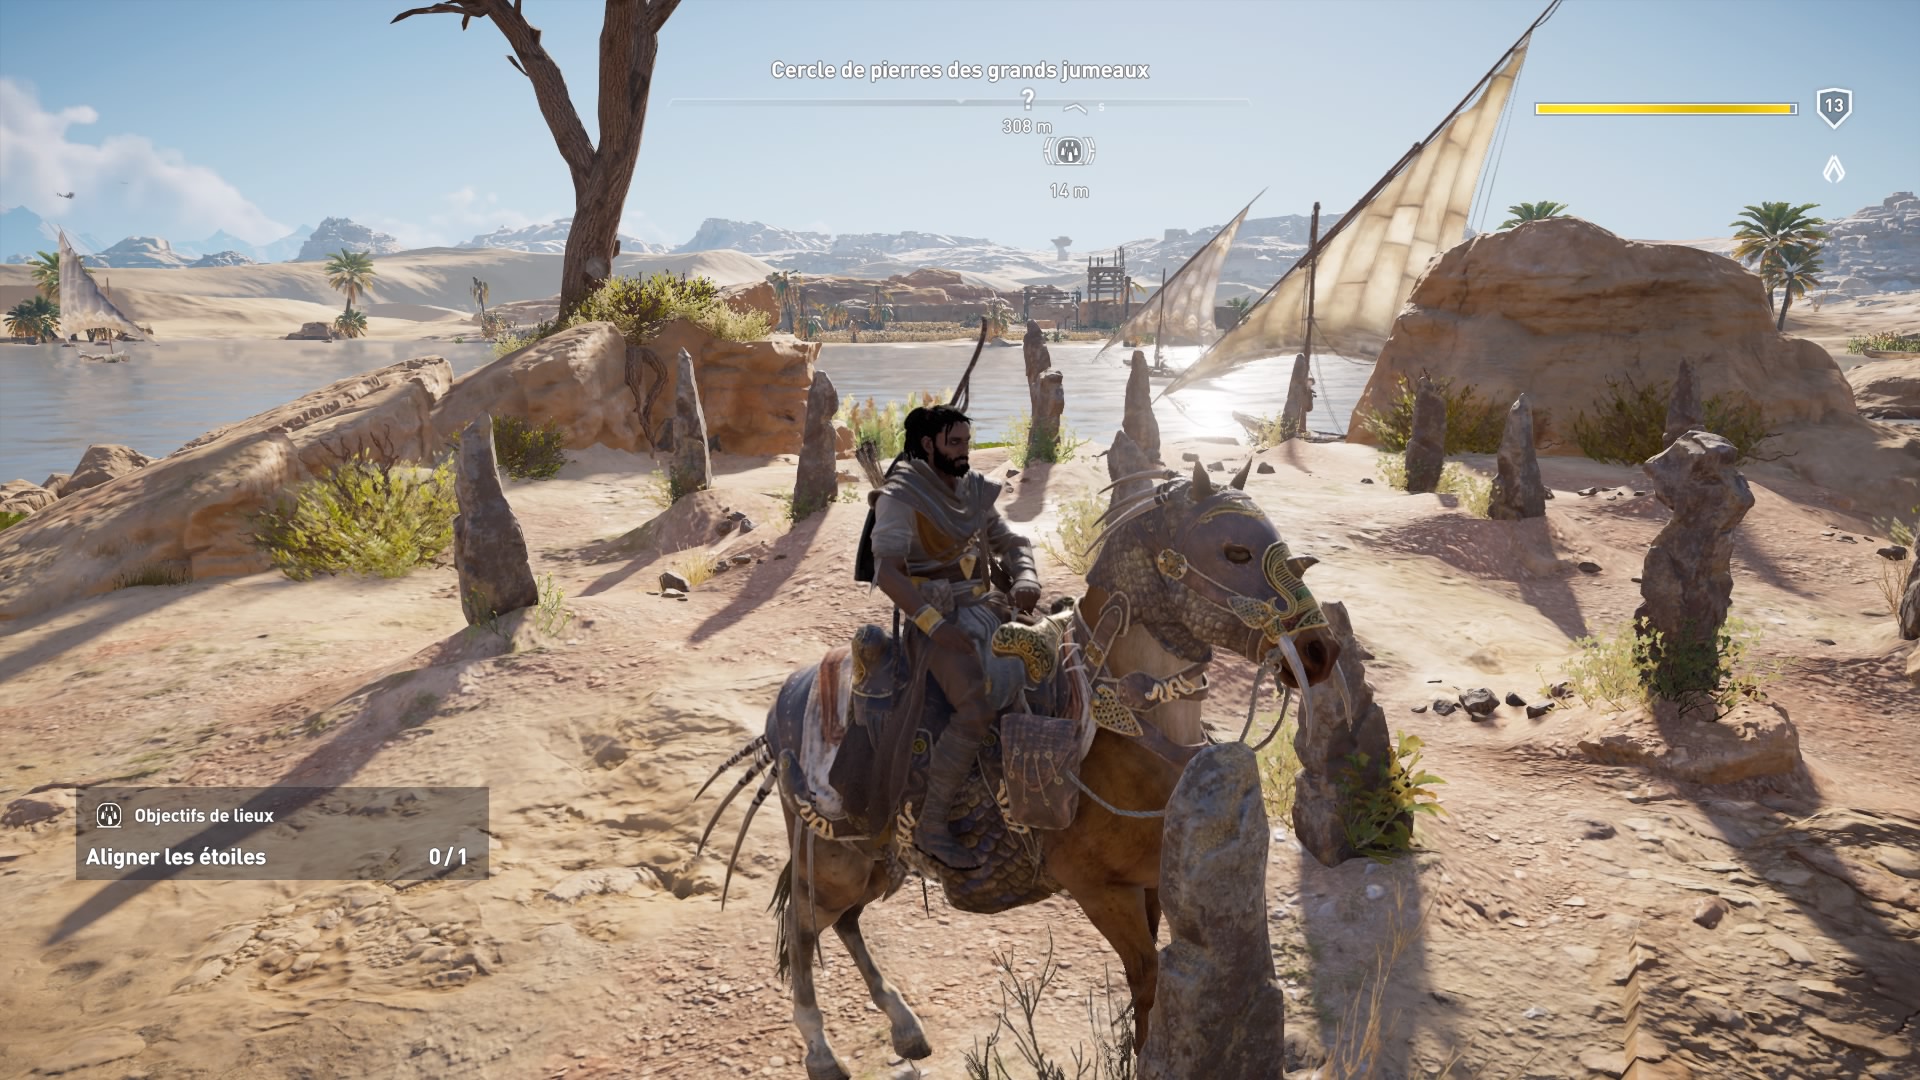 Assassin’s Creed Origins – Soluce Emplacement cercles de pierres